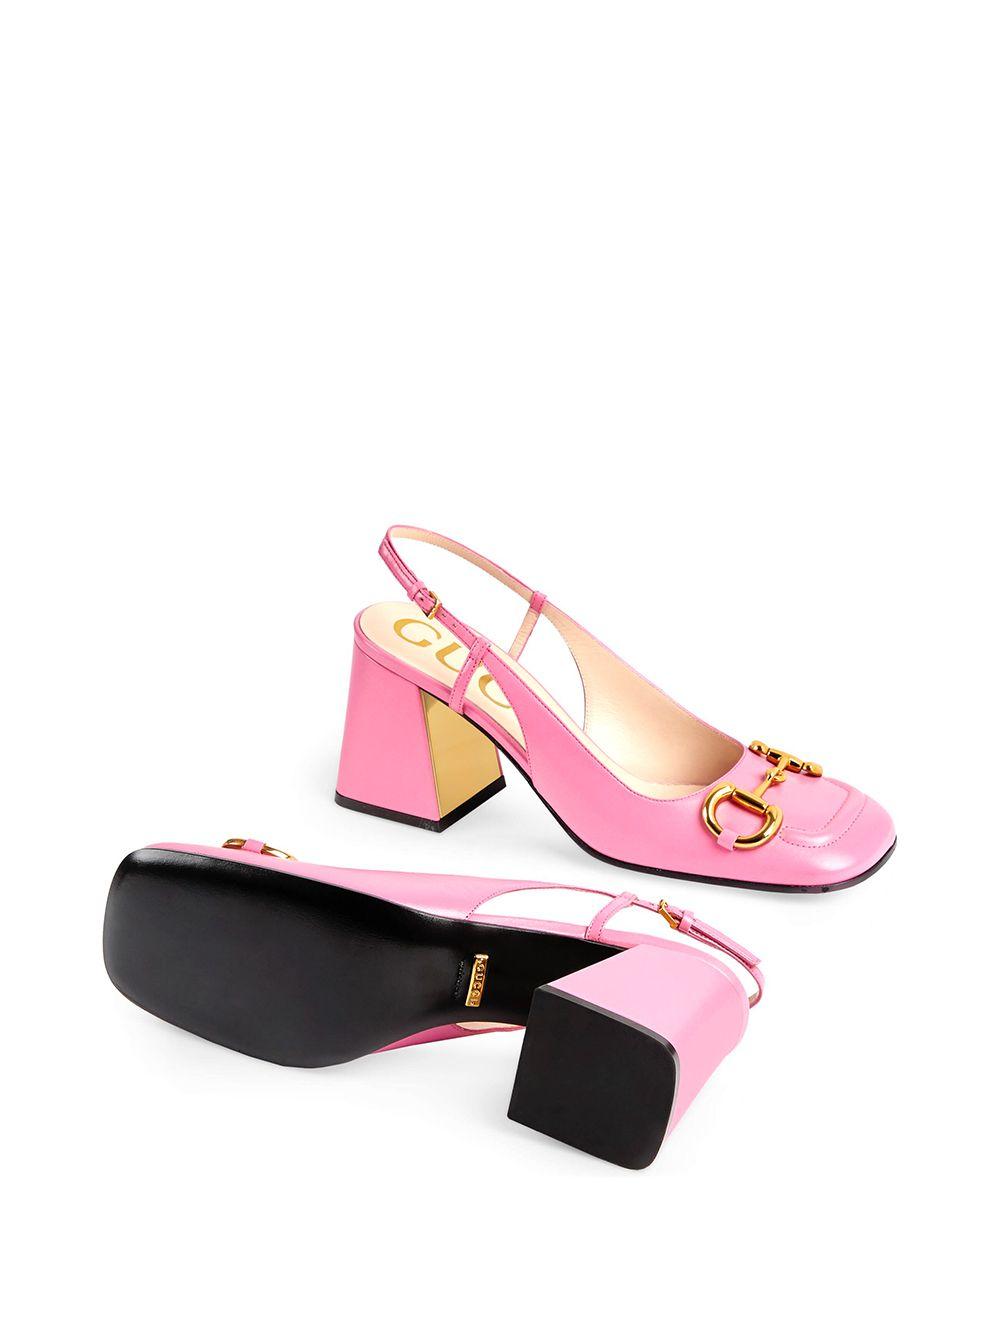 Gucci Leather Horsebit Mid-heel Slingback Pumps in Pink | Lyst